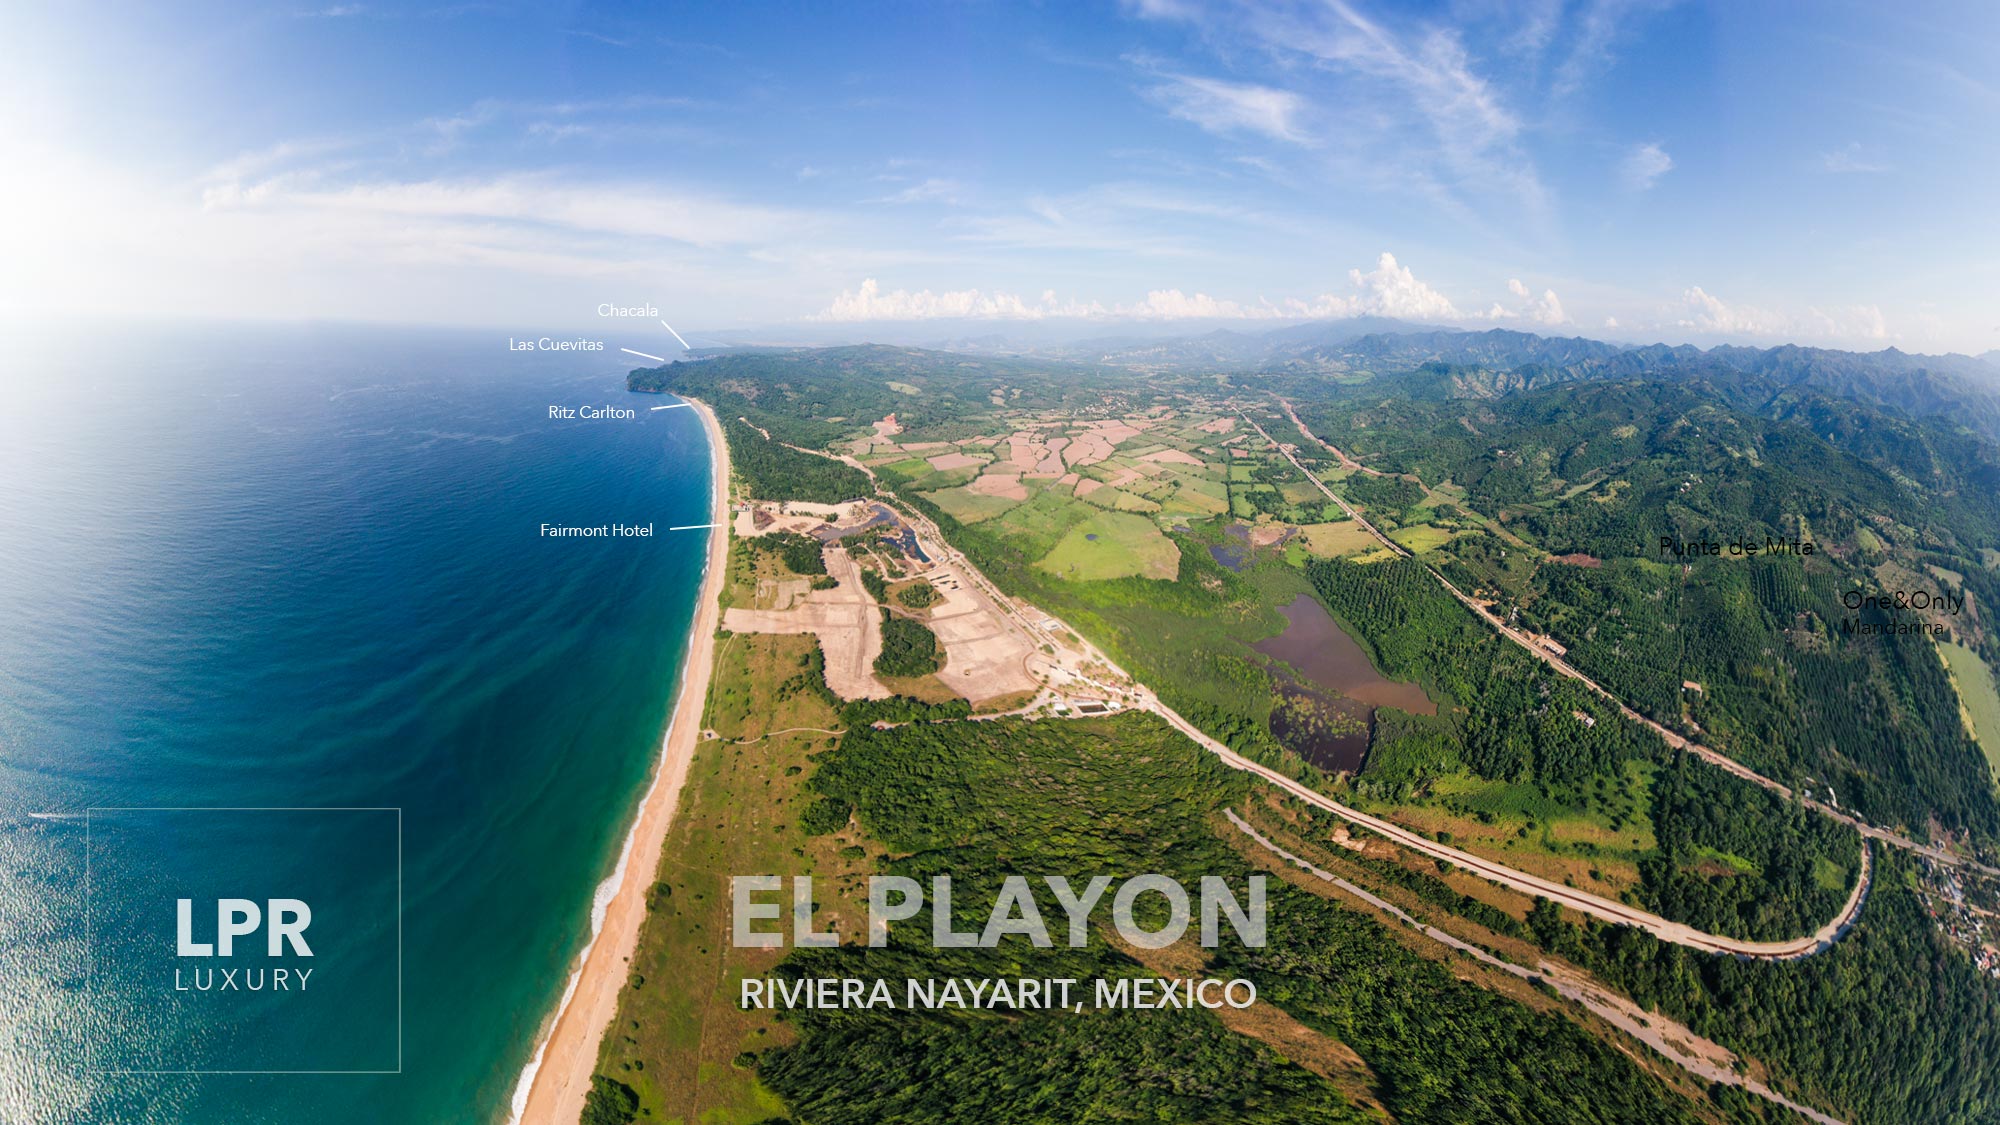 El Playon - Coasta Canuva, Riviera Nayarit luxury real estate - Development land - real estate, tierras, inmobiliaria